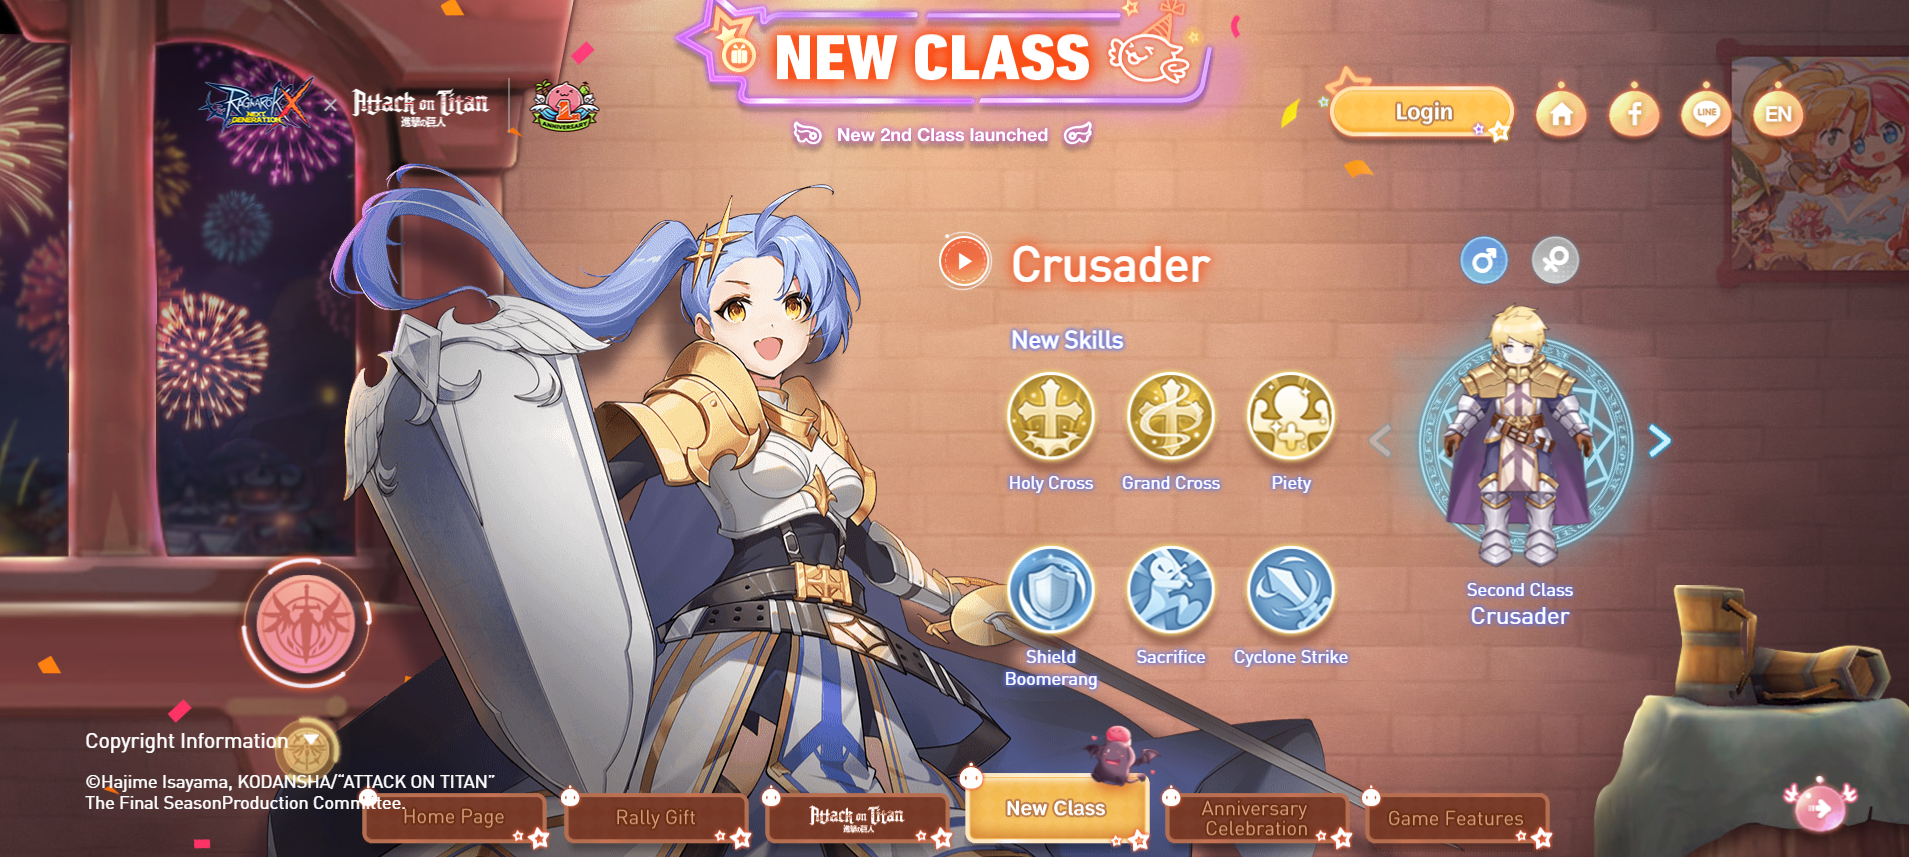 ROX New Class Crusader